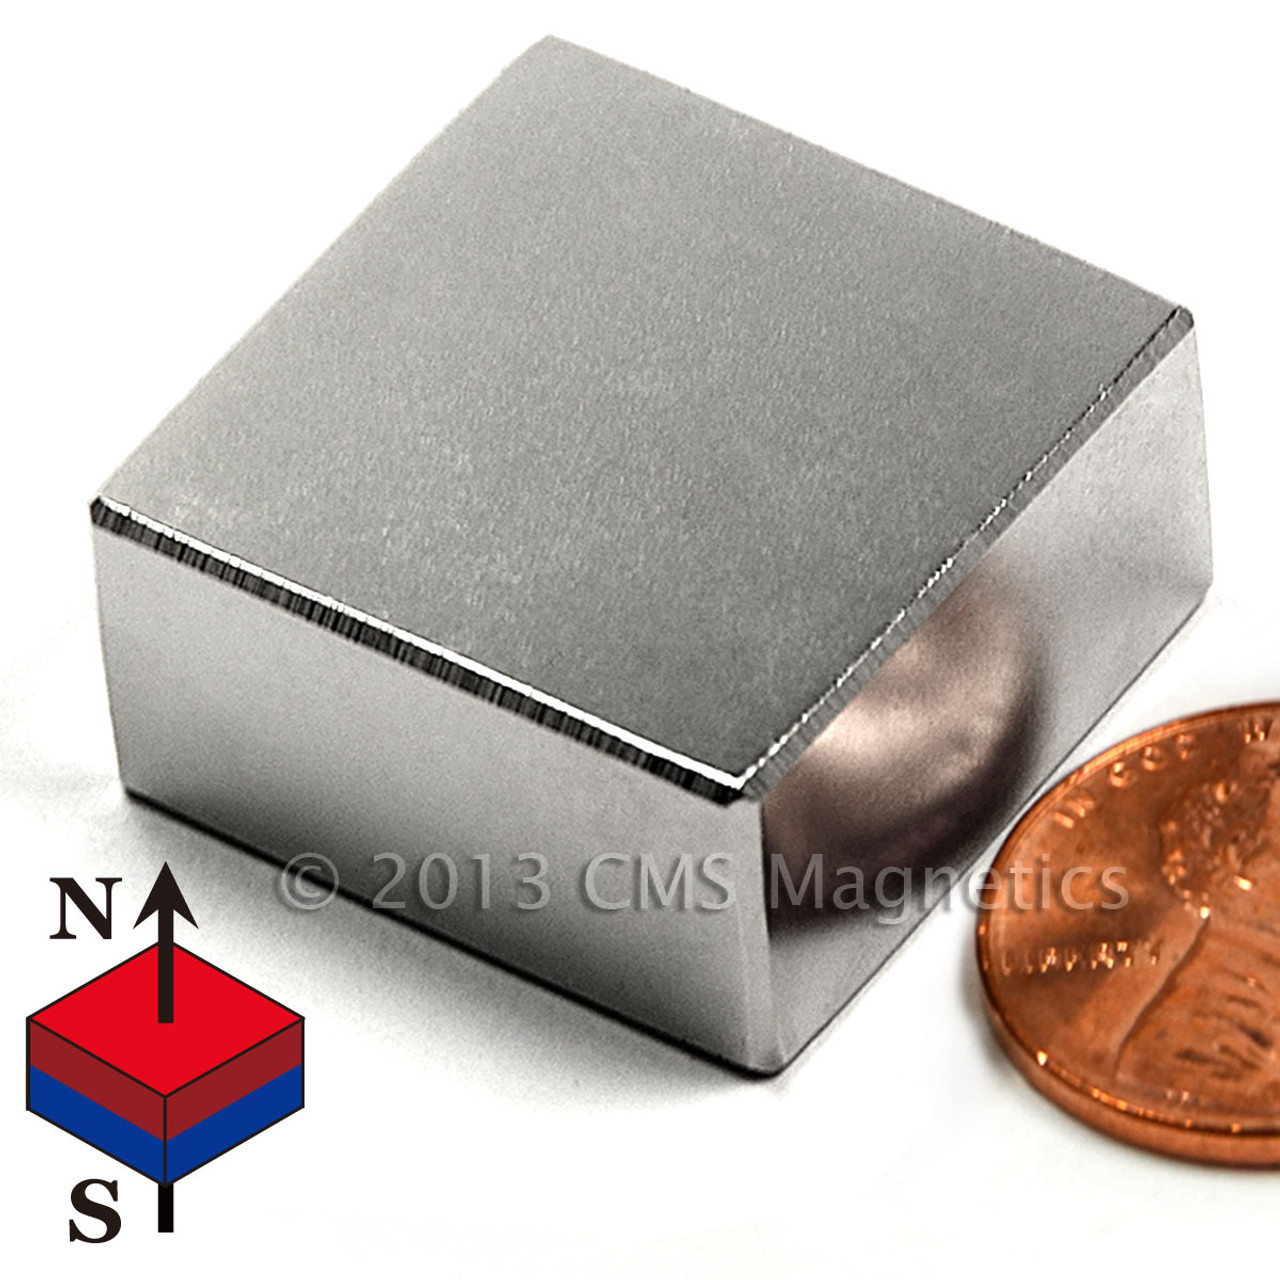 1"x1"x1/2" N52 Neodymium Magnet